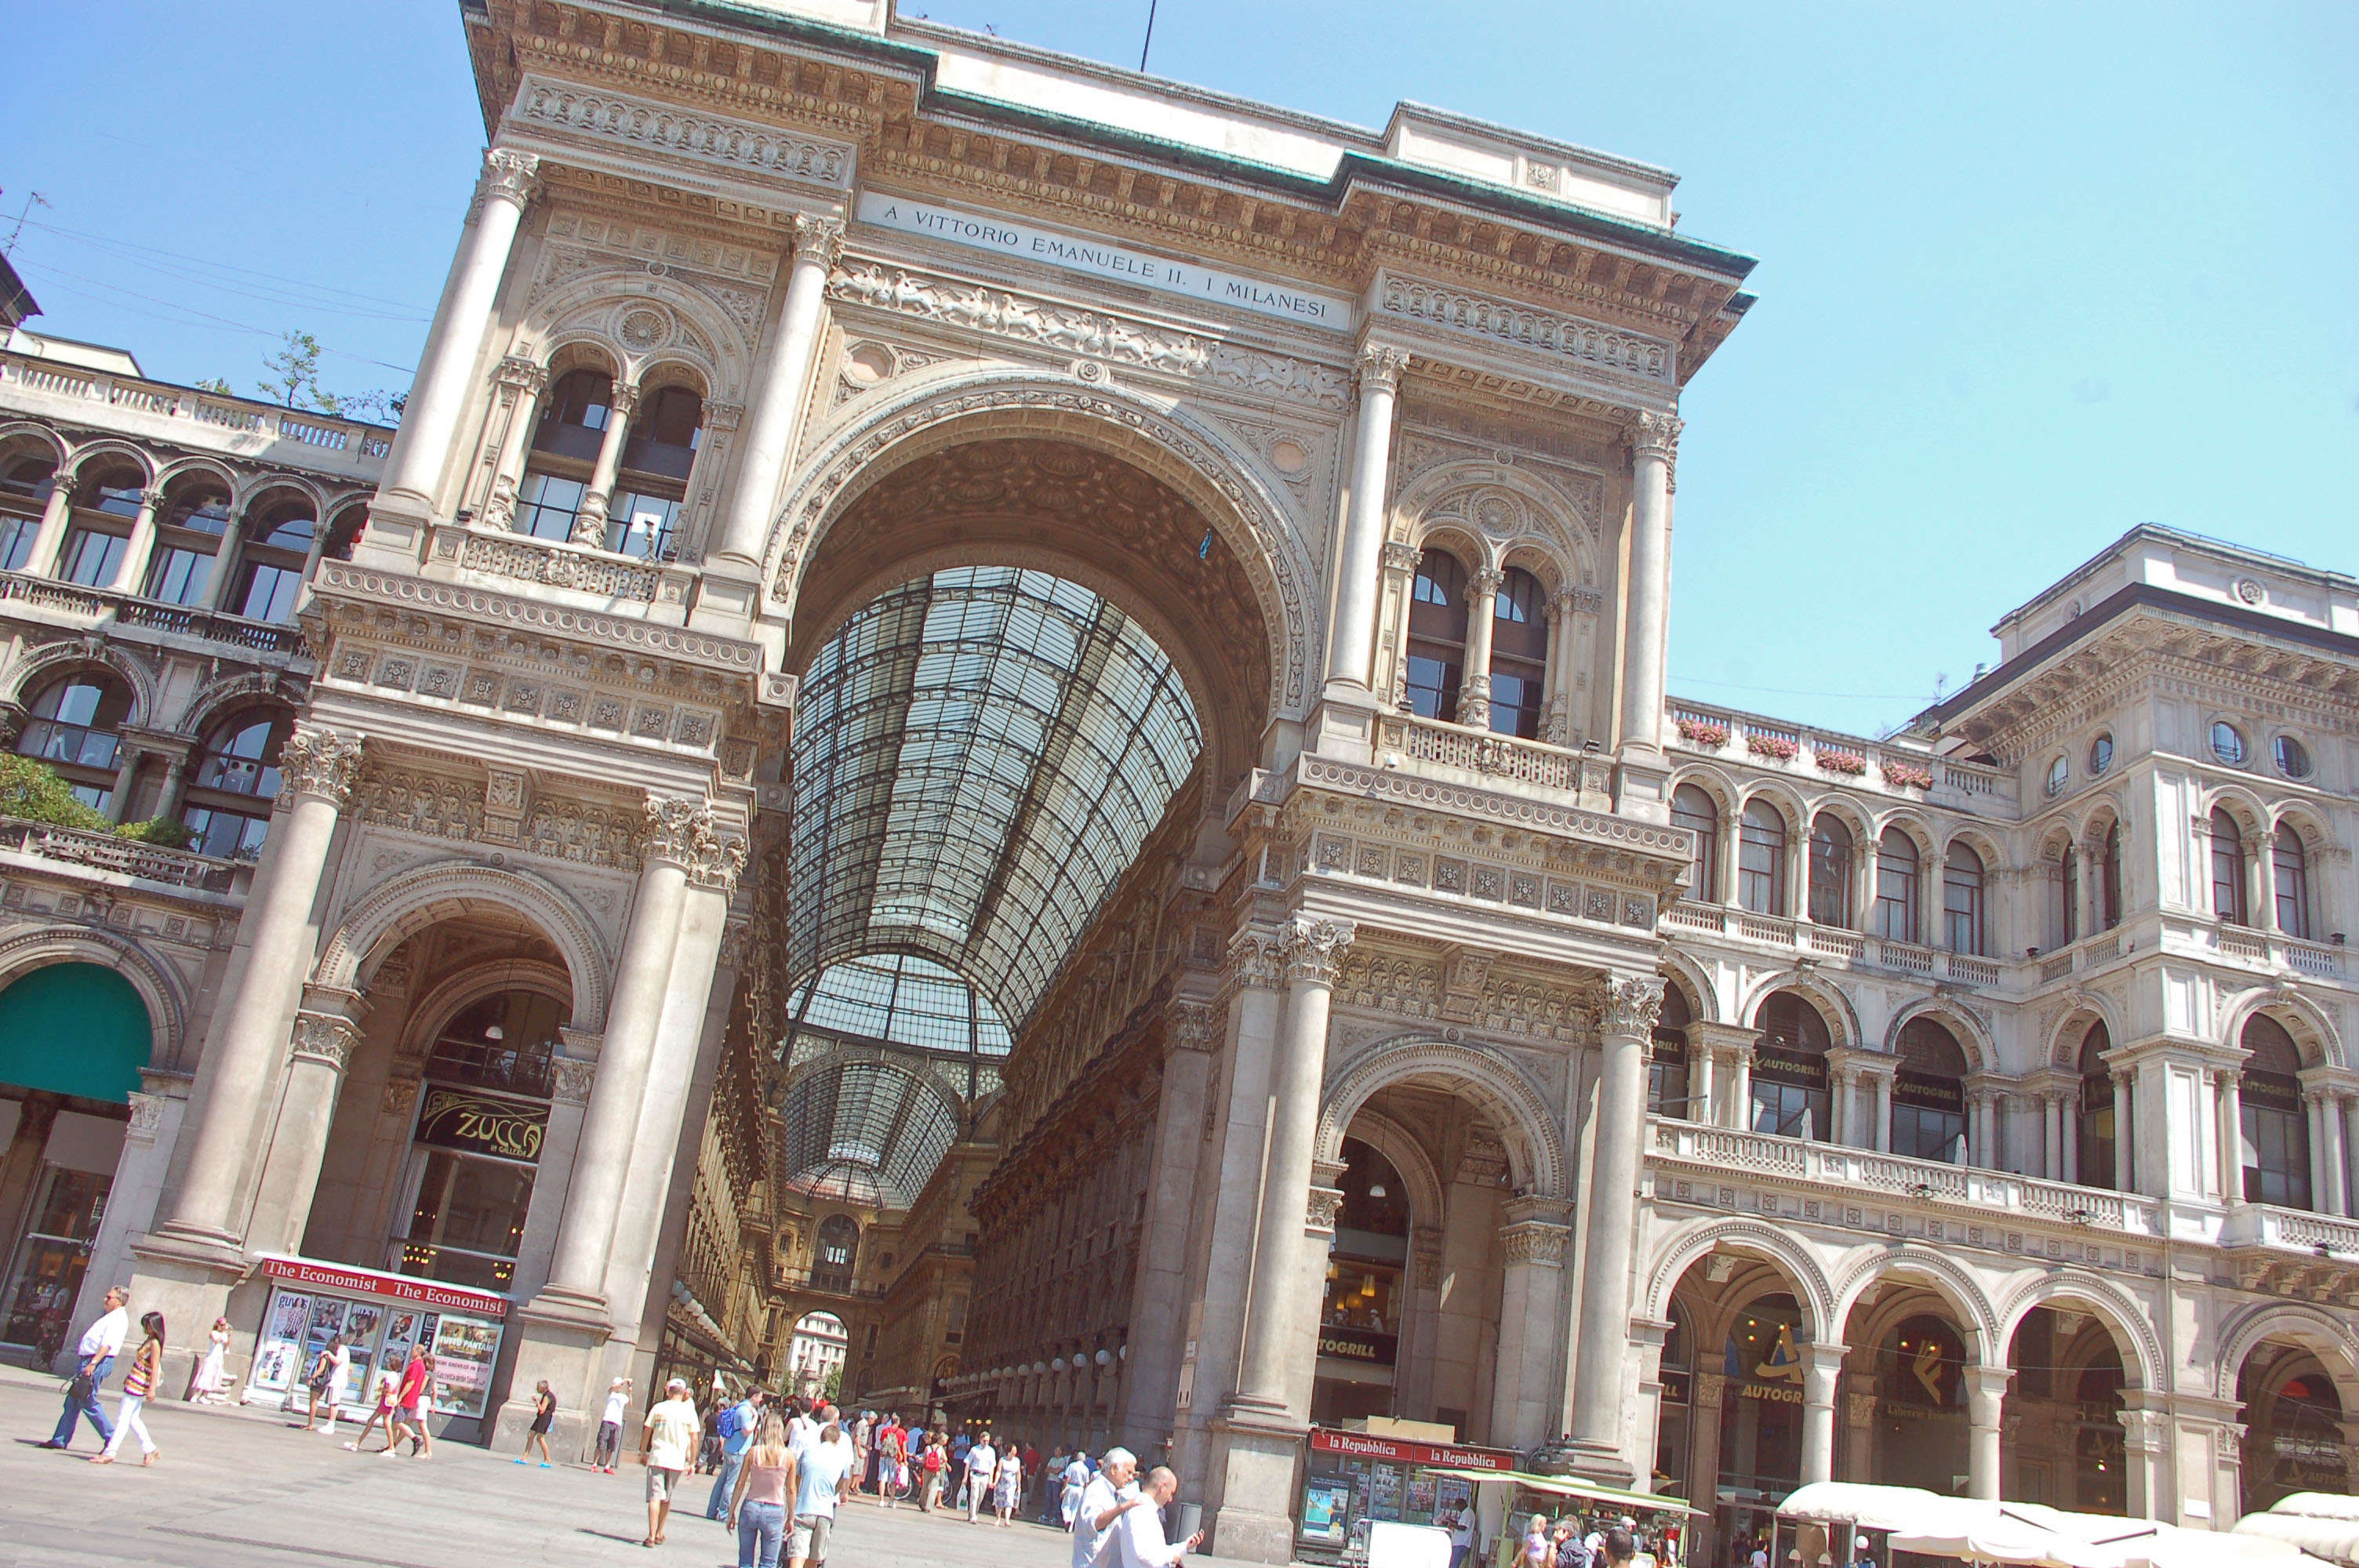 Galleria Vittorio Emanuele II: Why you should visit